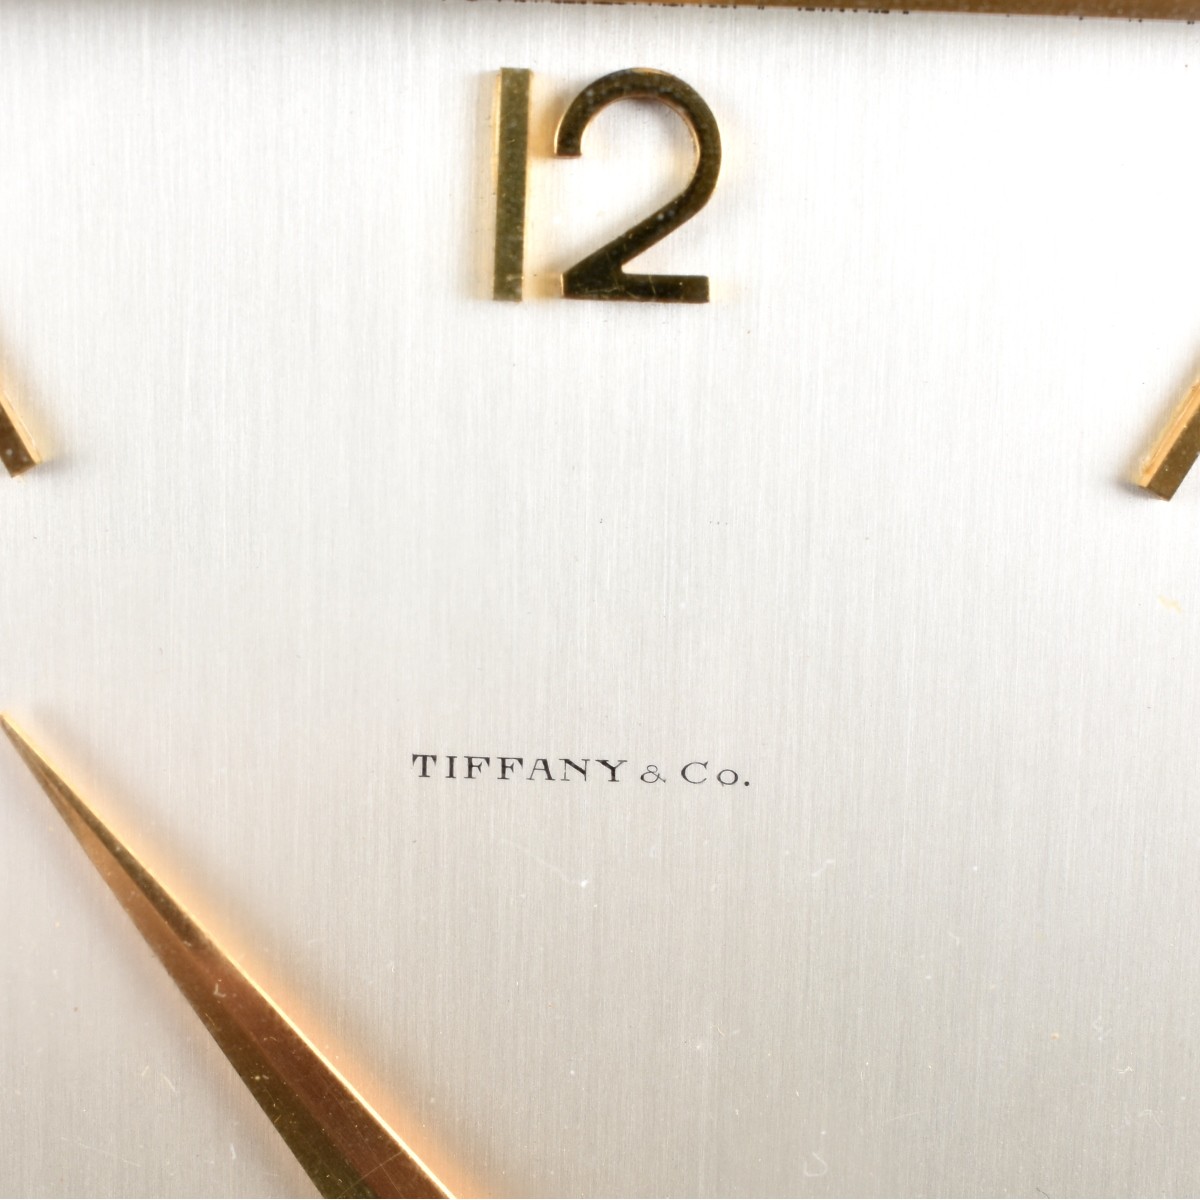 Tiffany & Co. Desk Clock